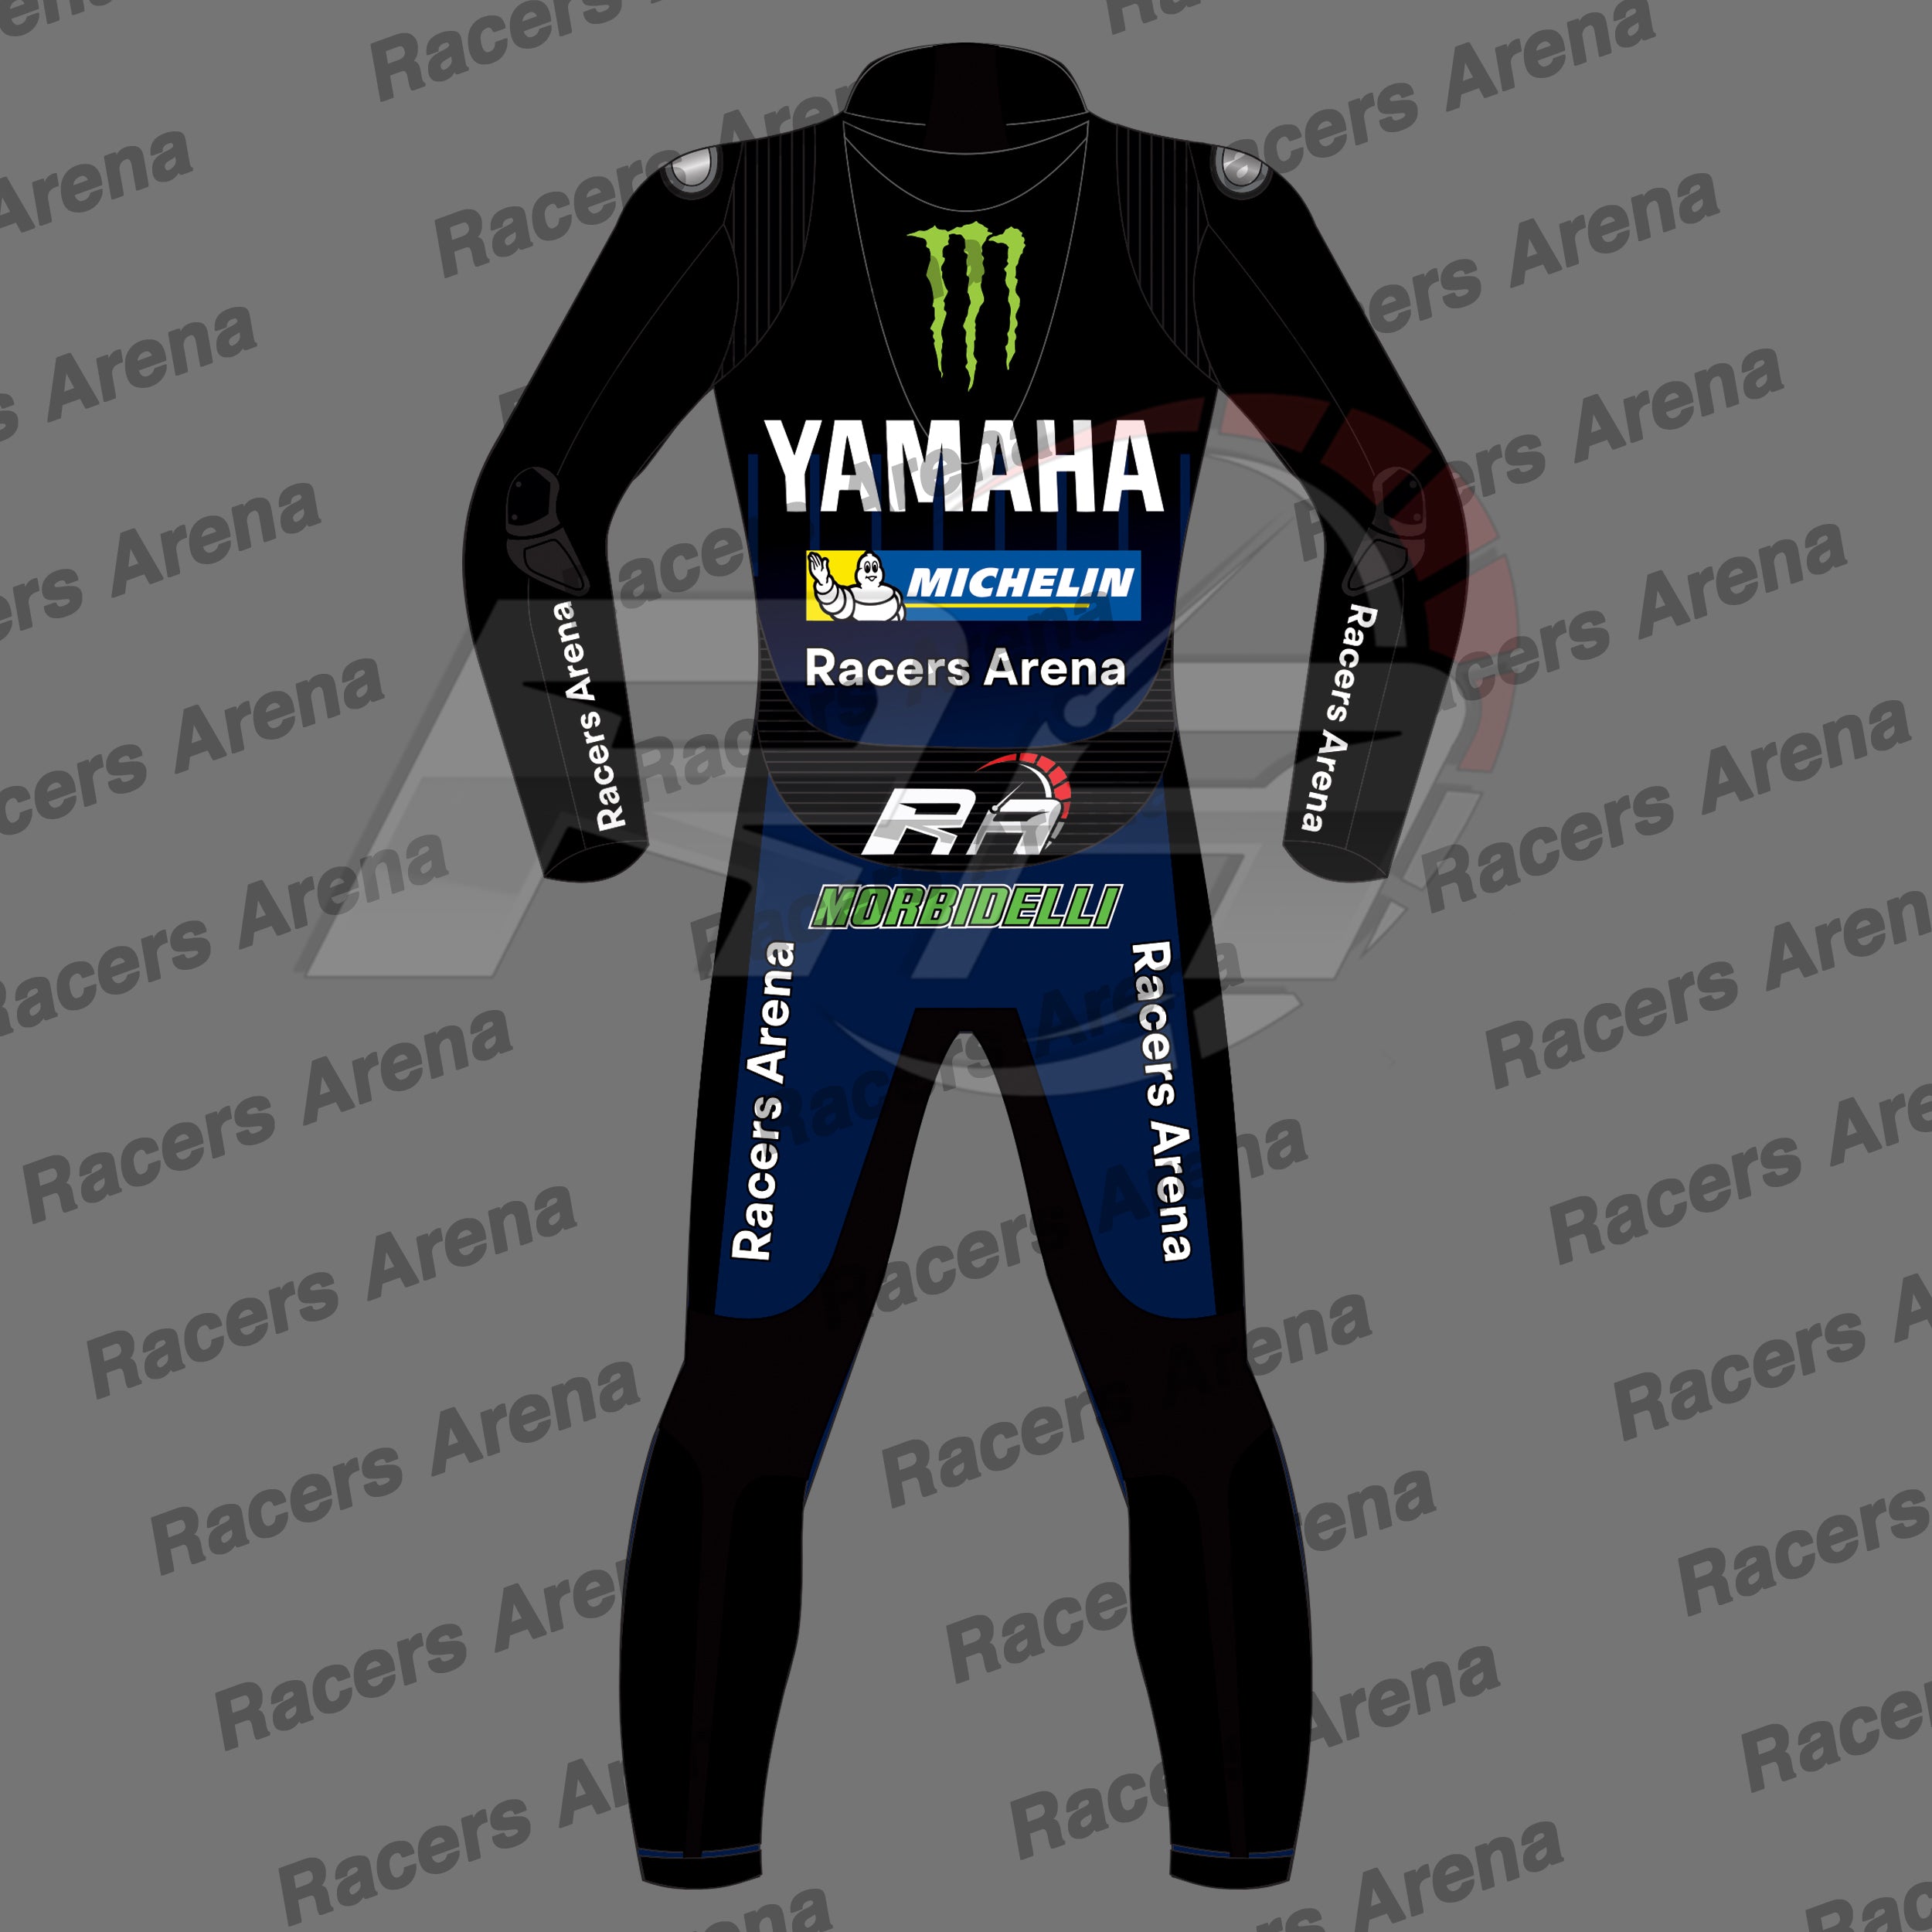 Franco Morbidelli’s MotoGP 2022 Monster Energy Race Suit